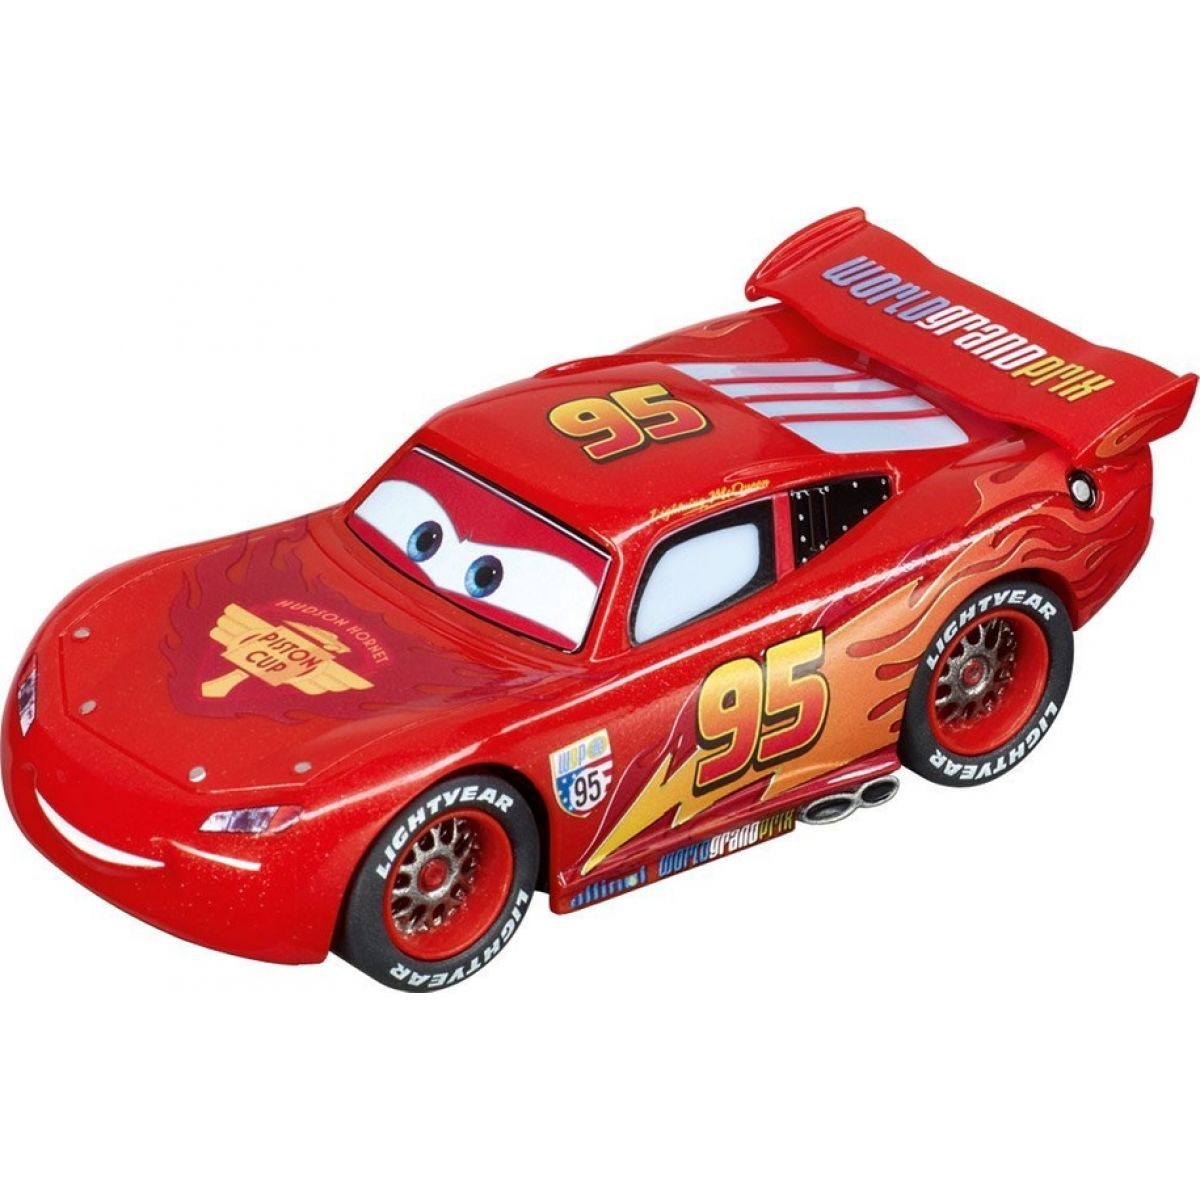 Carrera GO! Disney Cars 2 Lightning McQueen - II.jakost